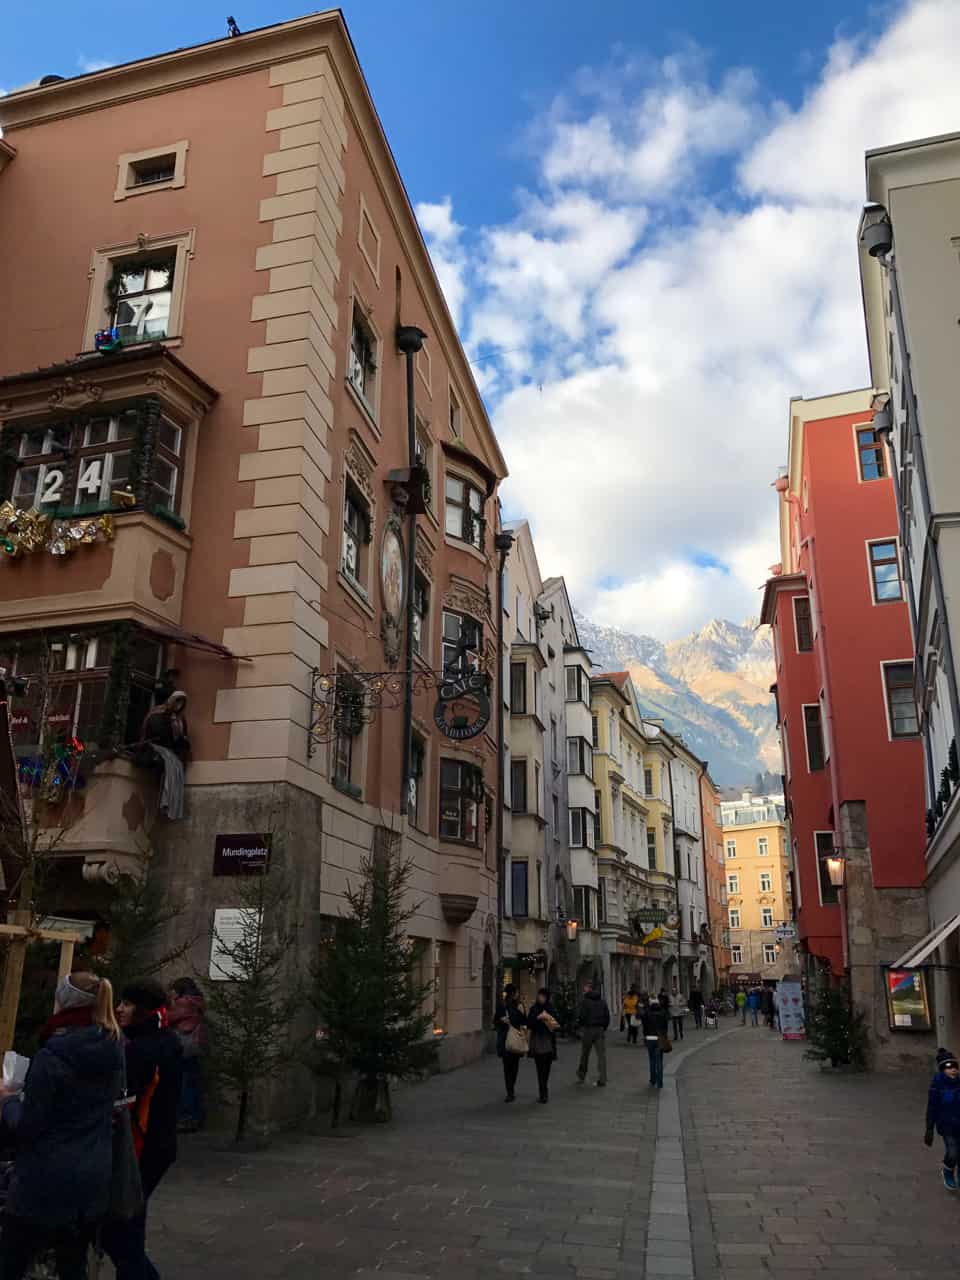 Typical street scene on an Innsbruck itinerary.